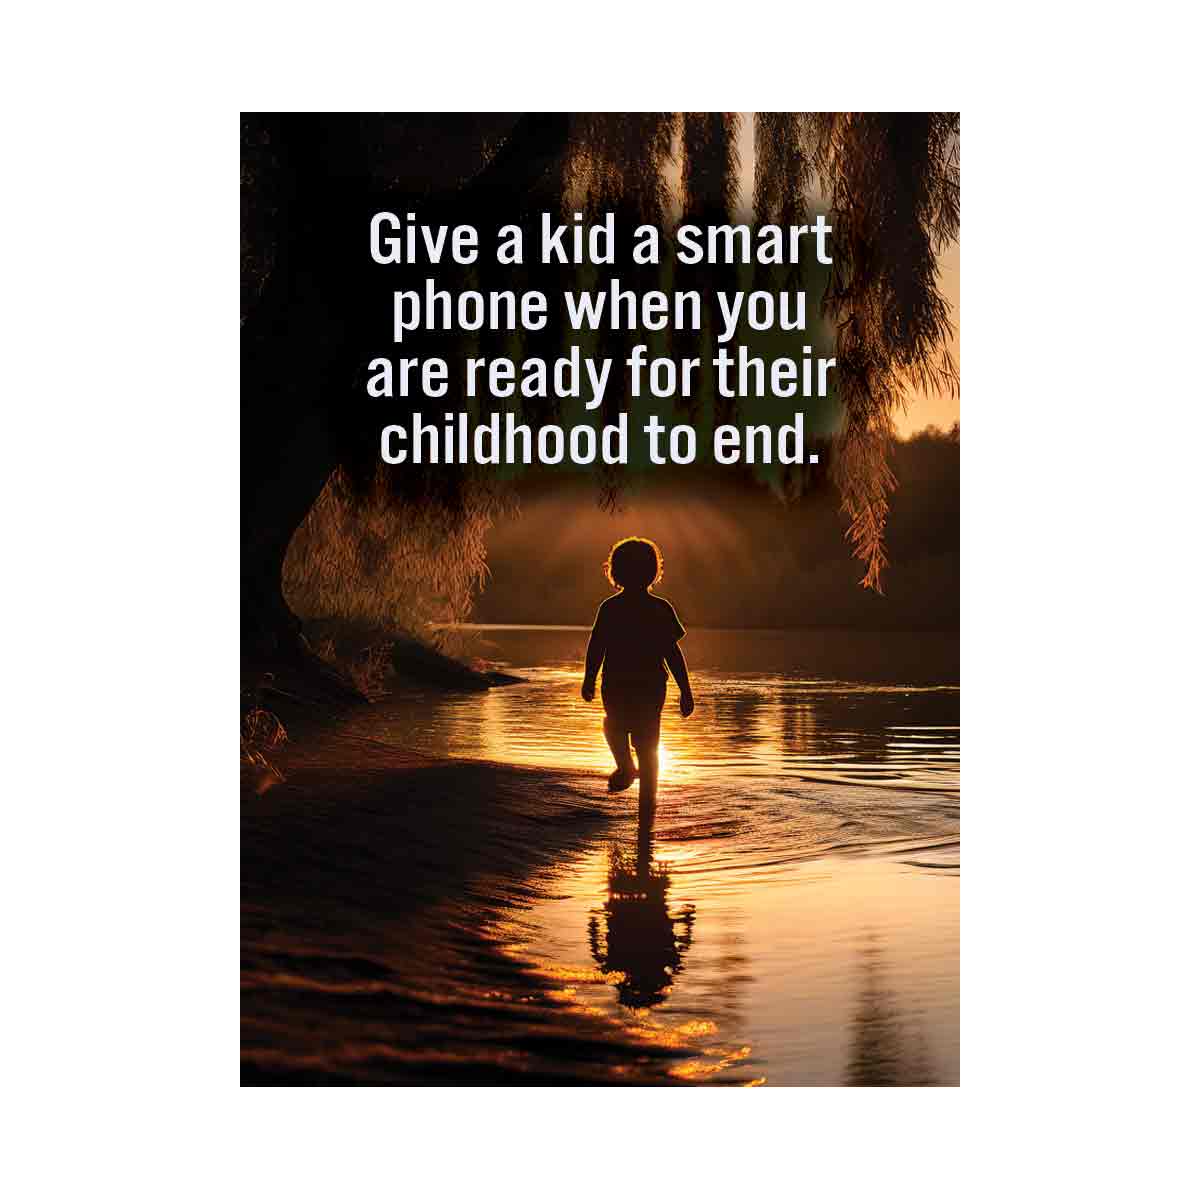 Give a kid a smart phone